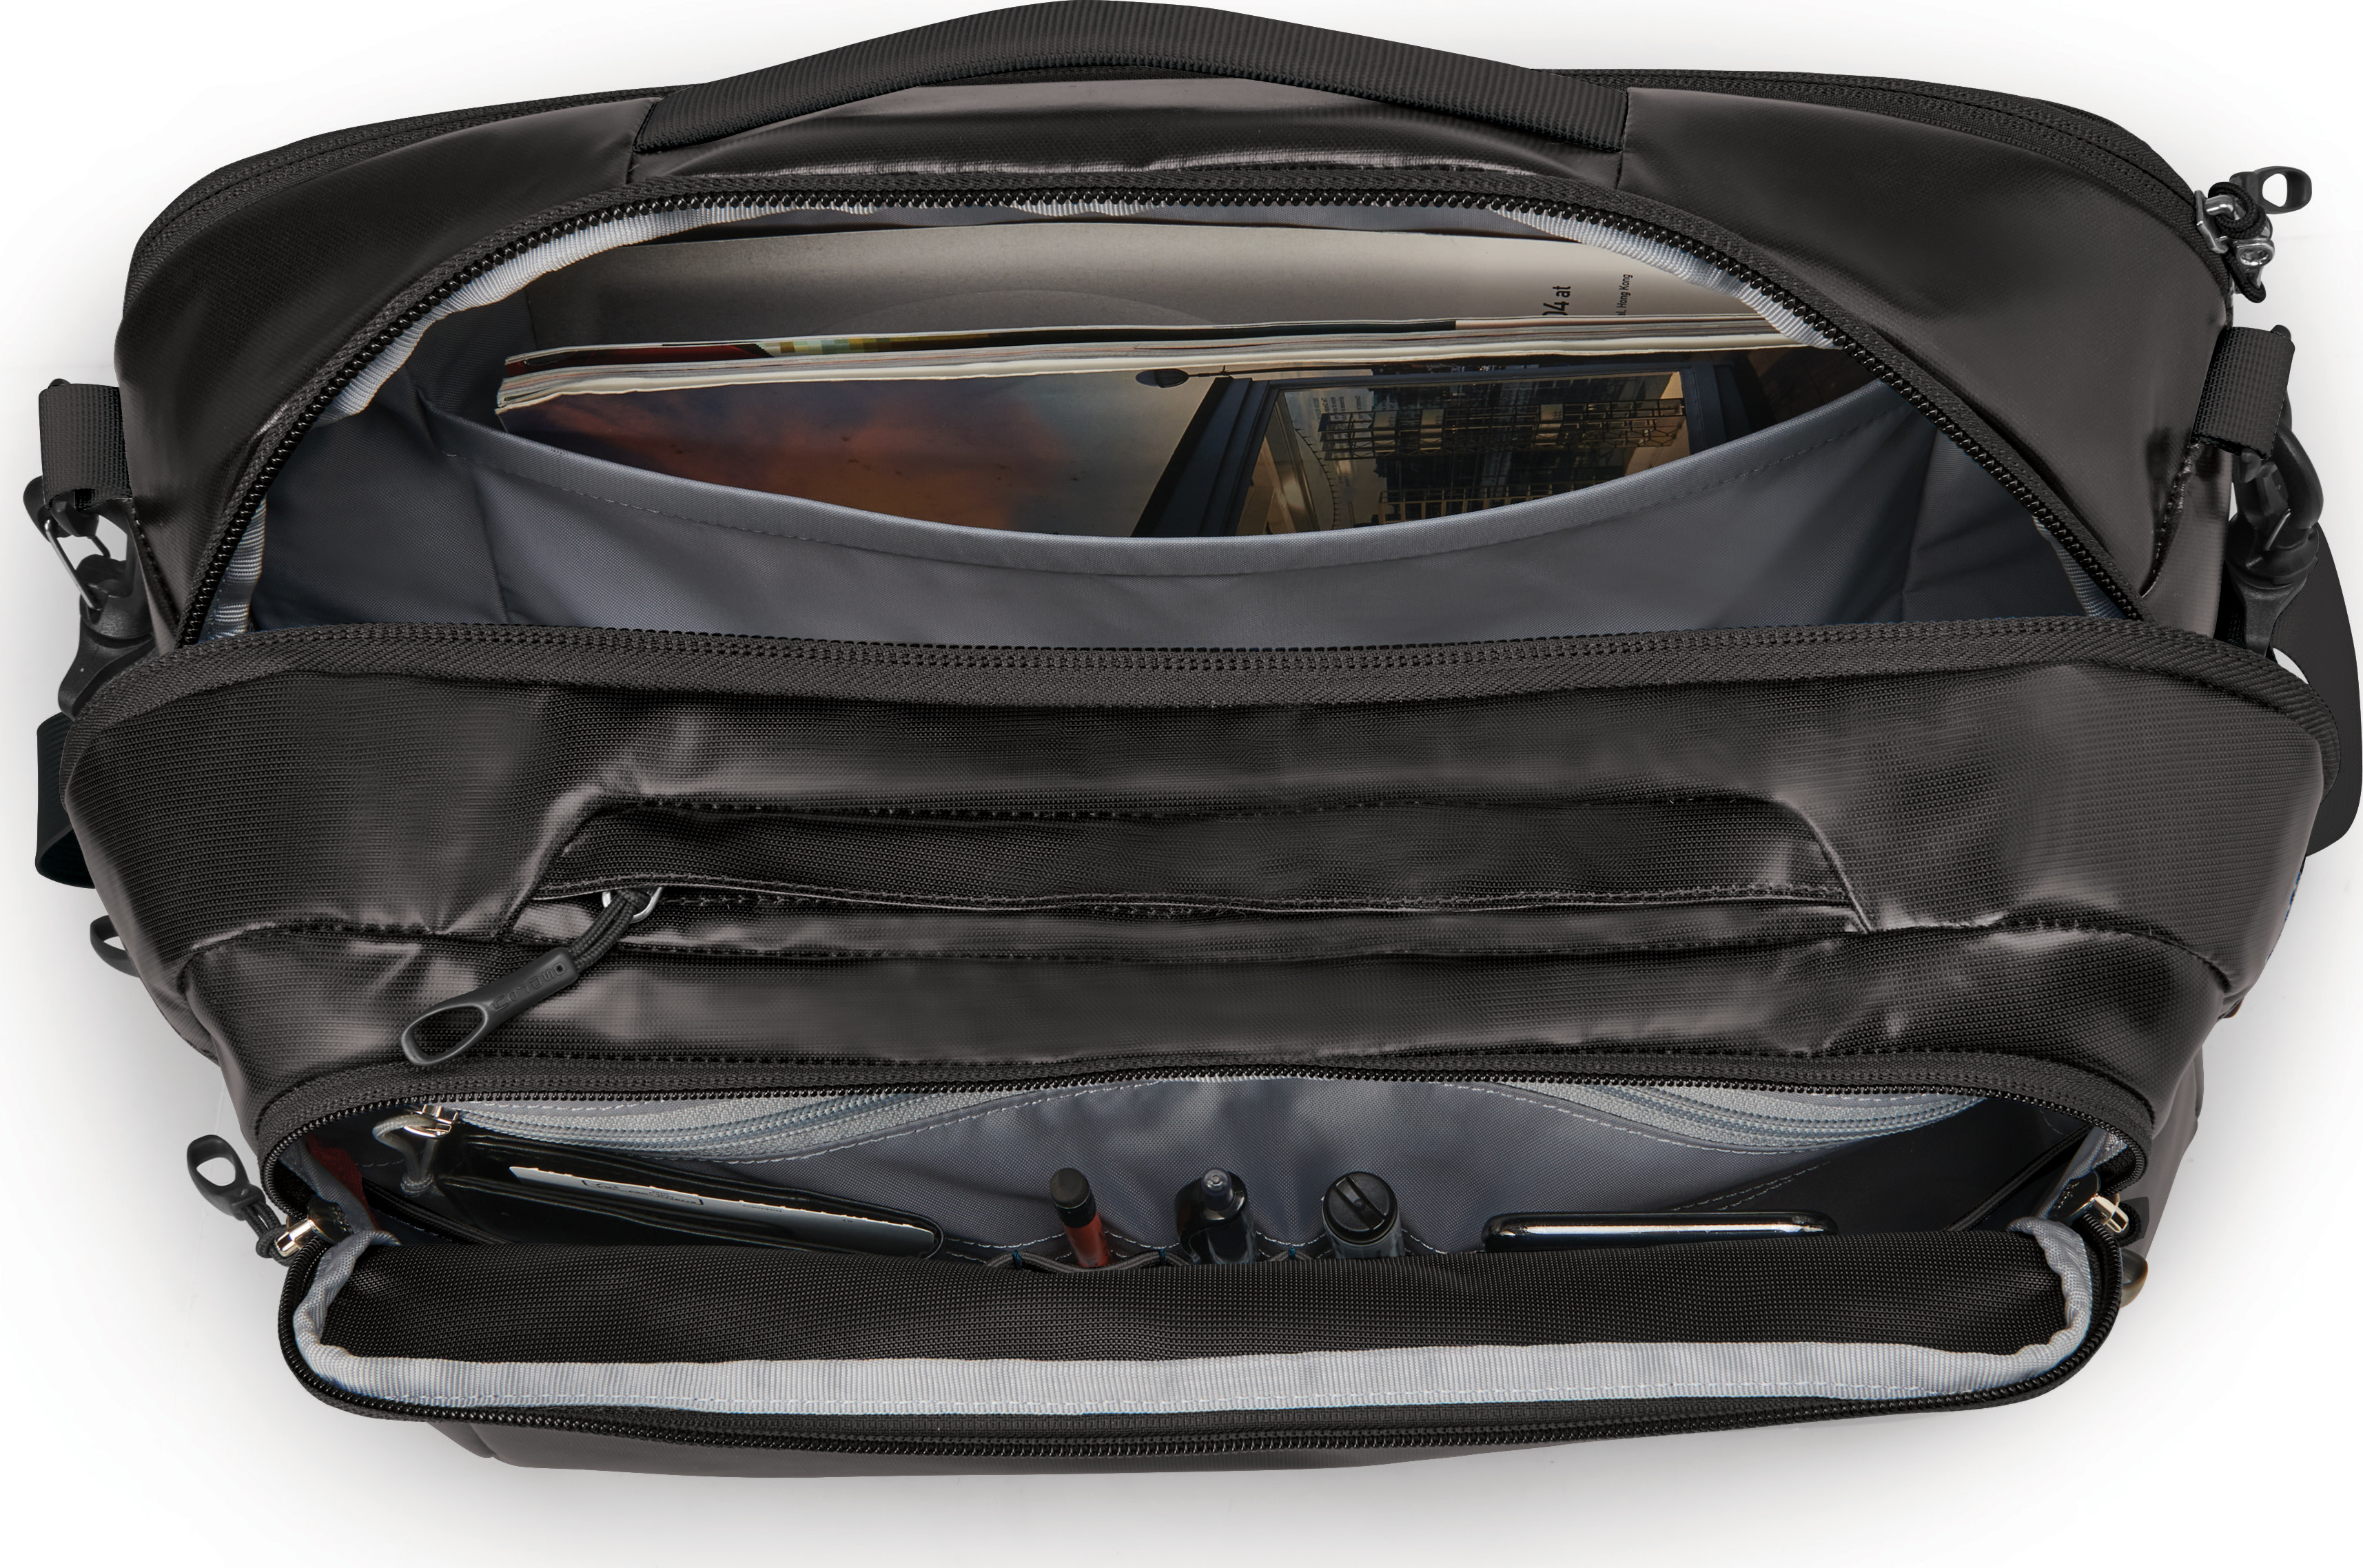 Osprey Packs | Transporter Boarding Bag | Product Tour - YouTube